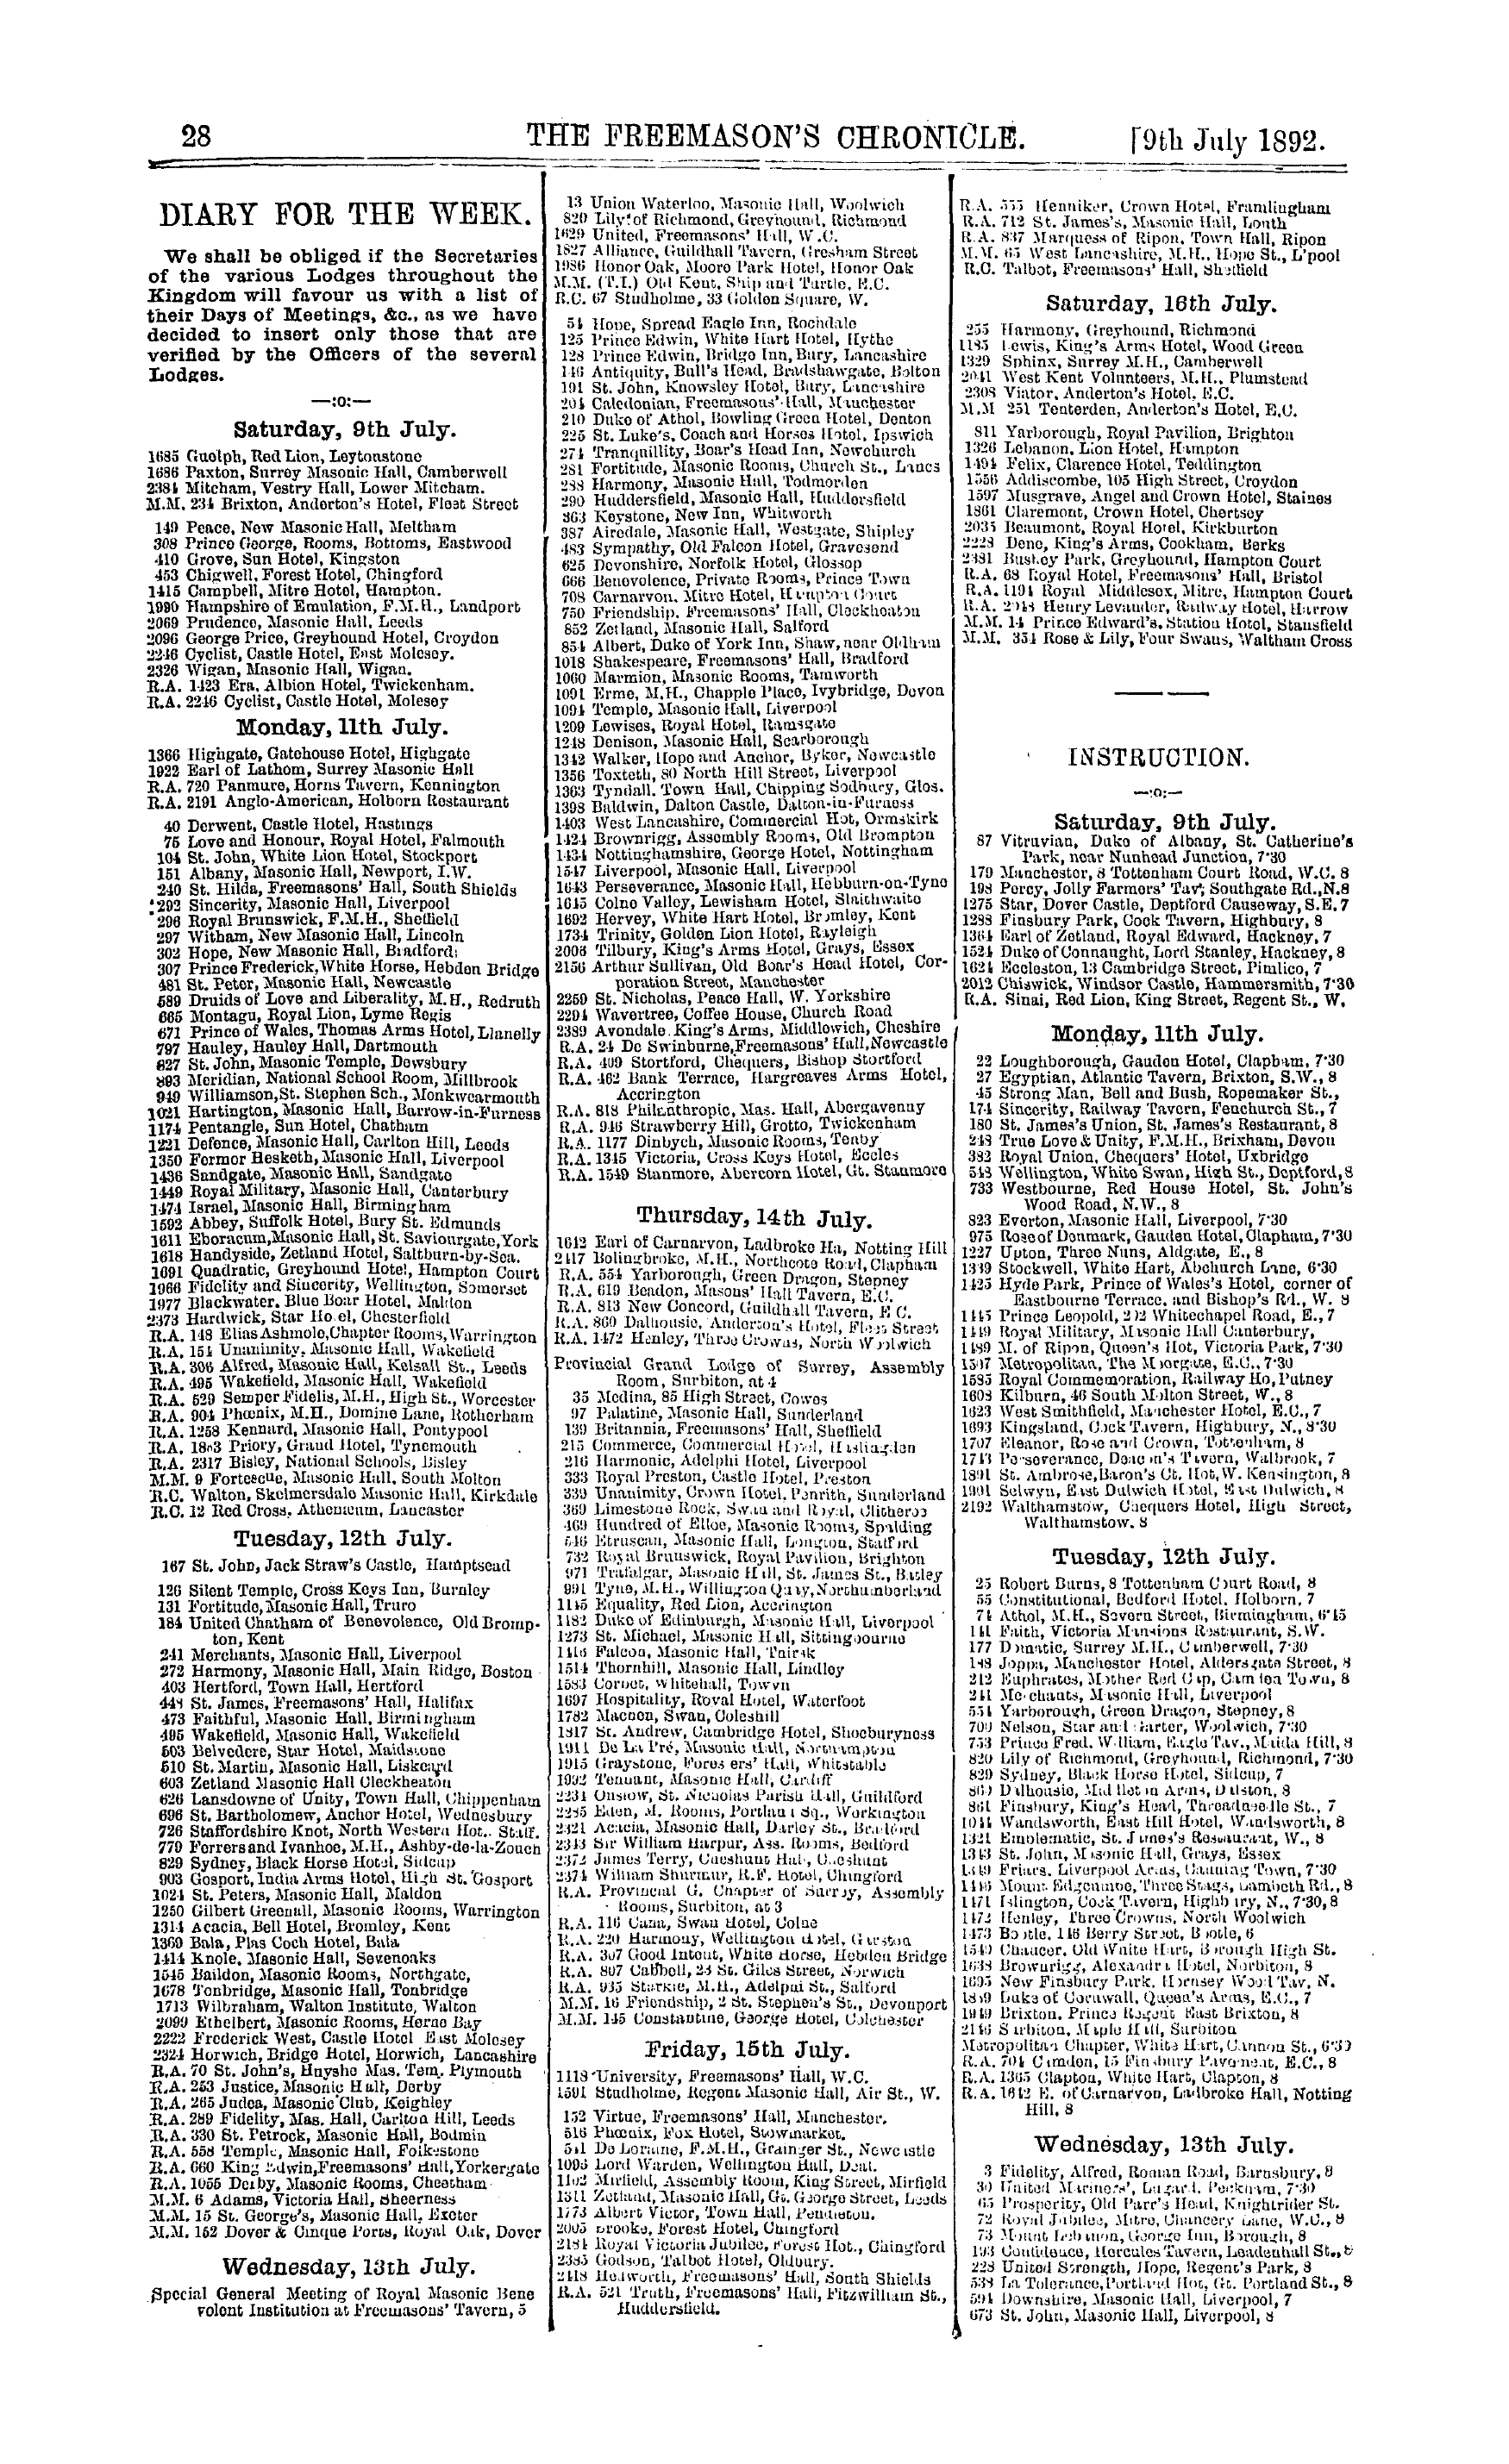 The Freemason's Chronicle: 1892-07-09: 12